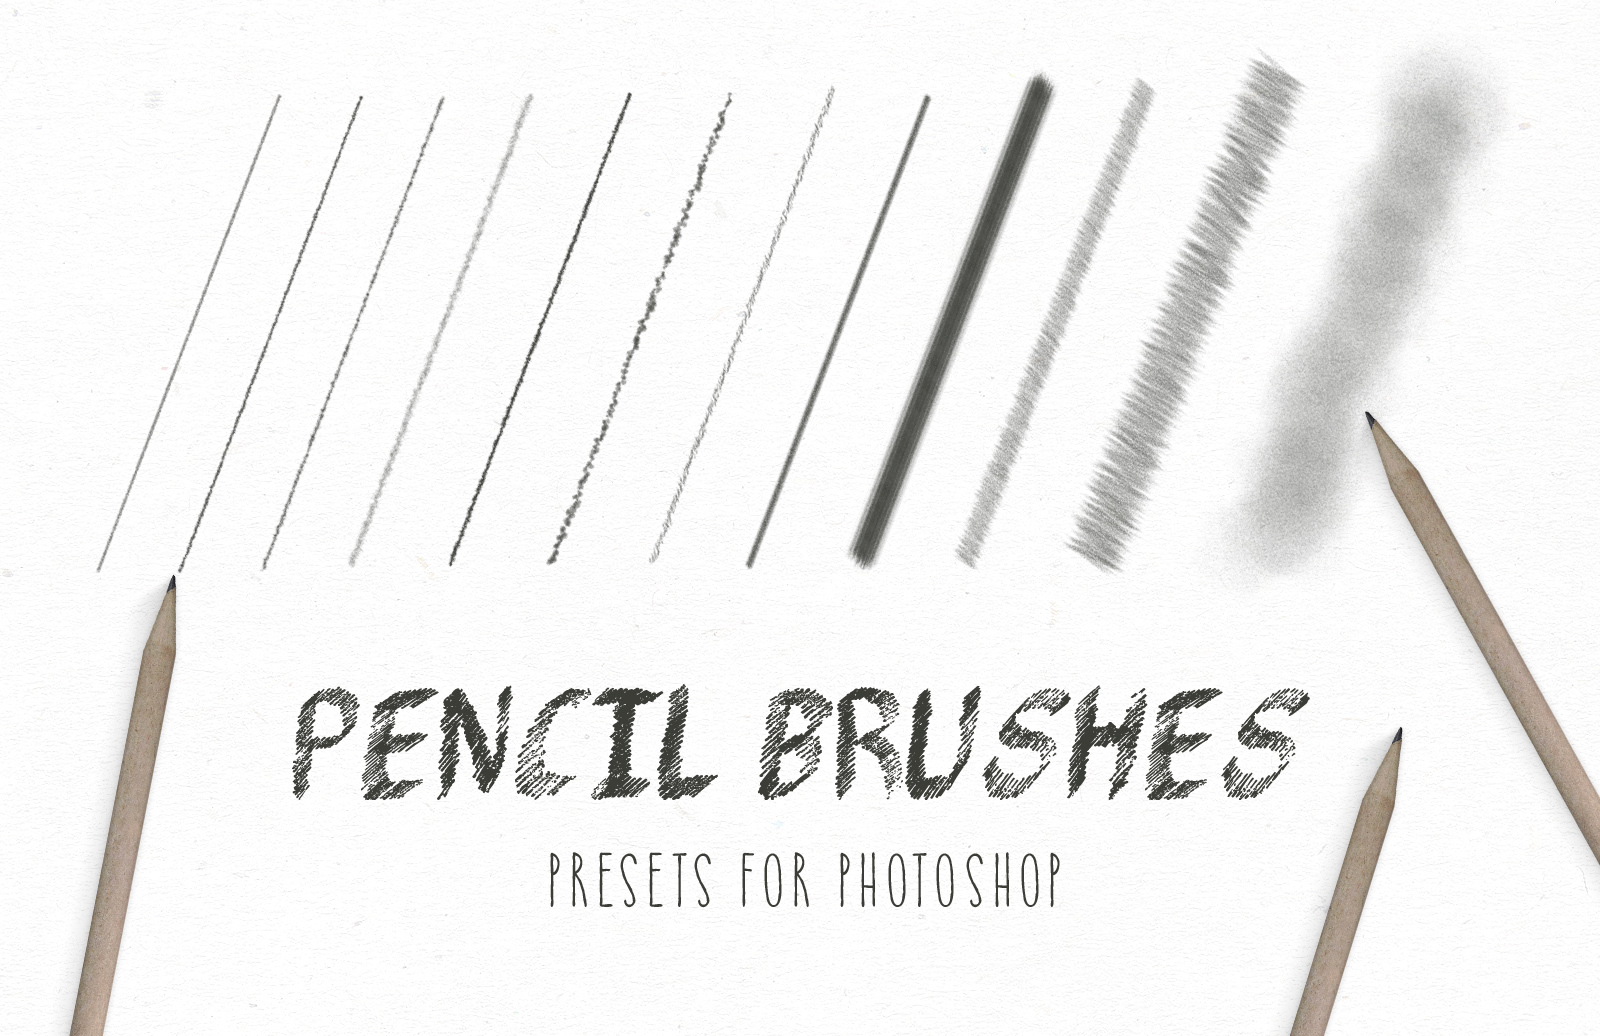 photoshop eraser brushes free download